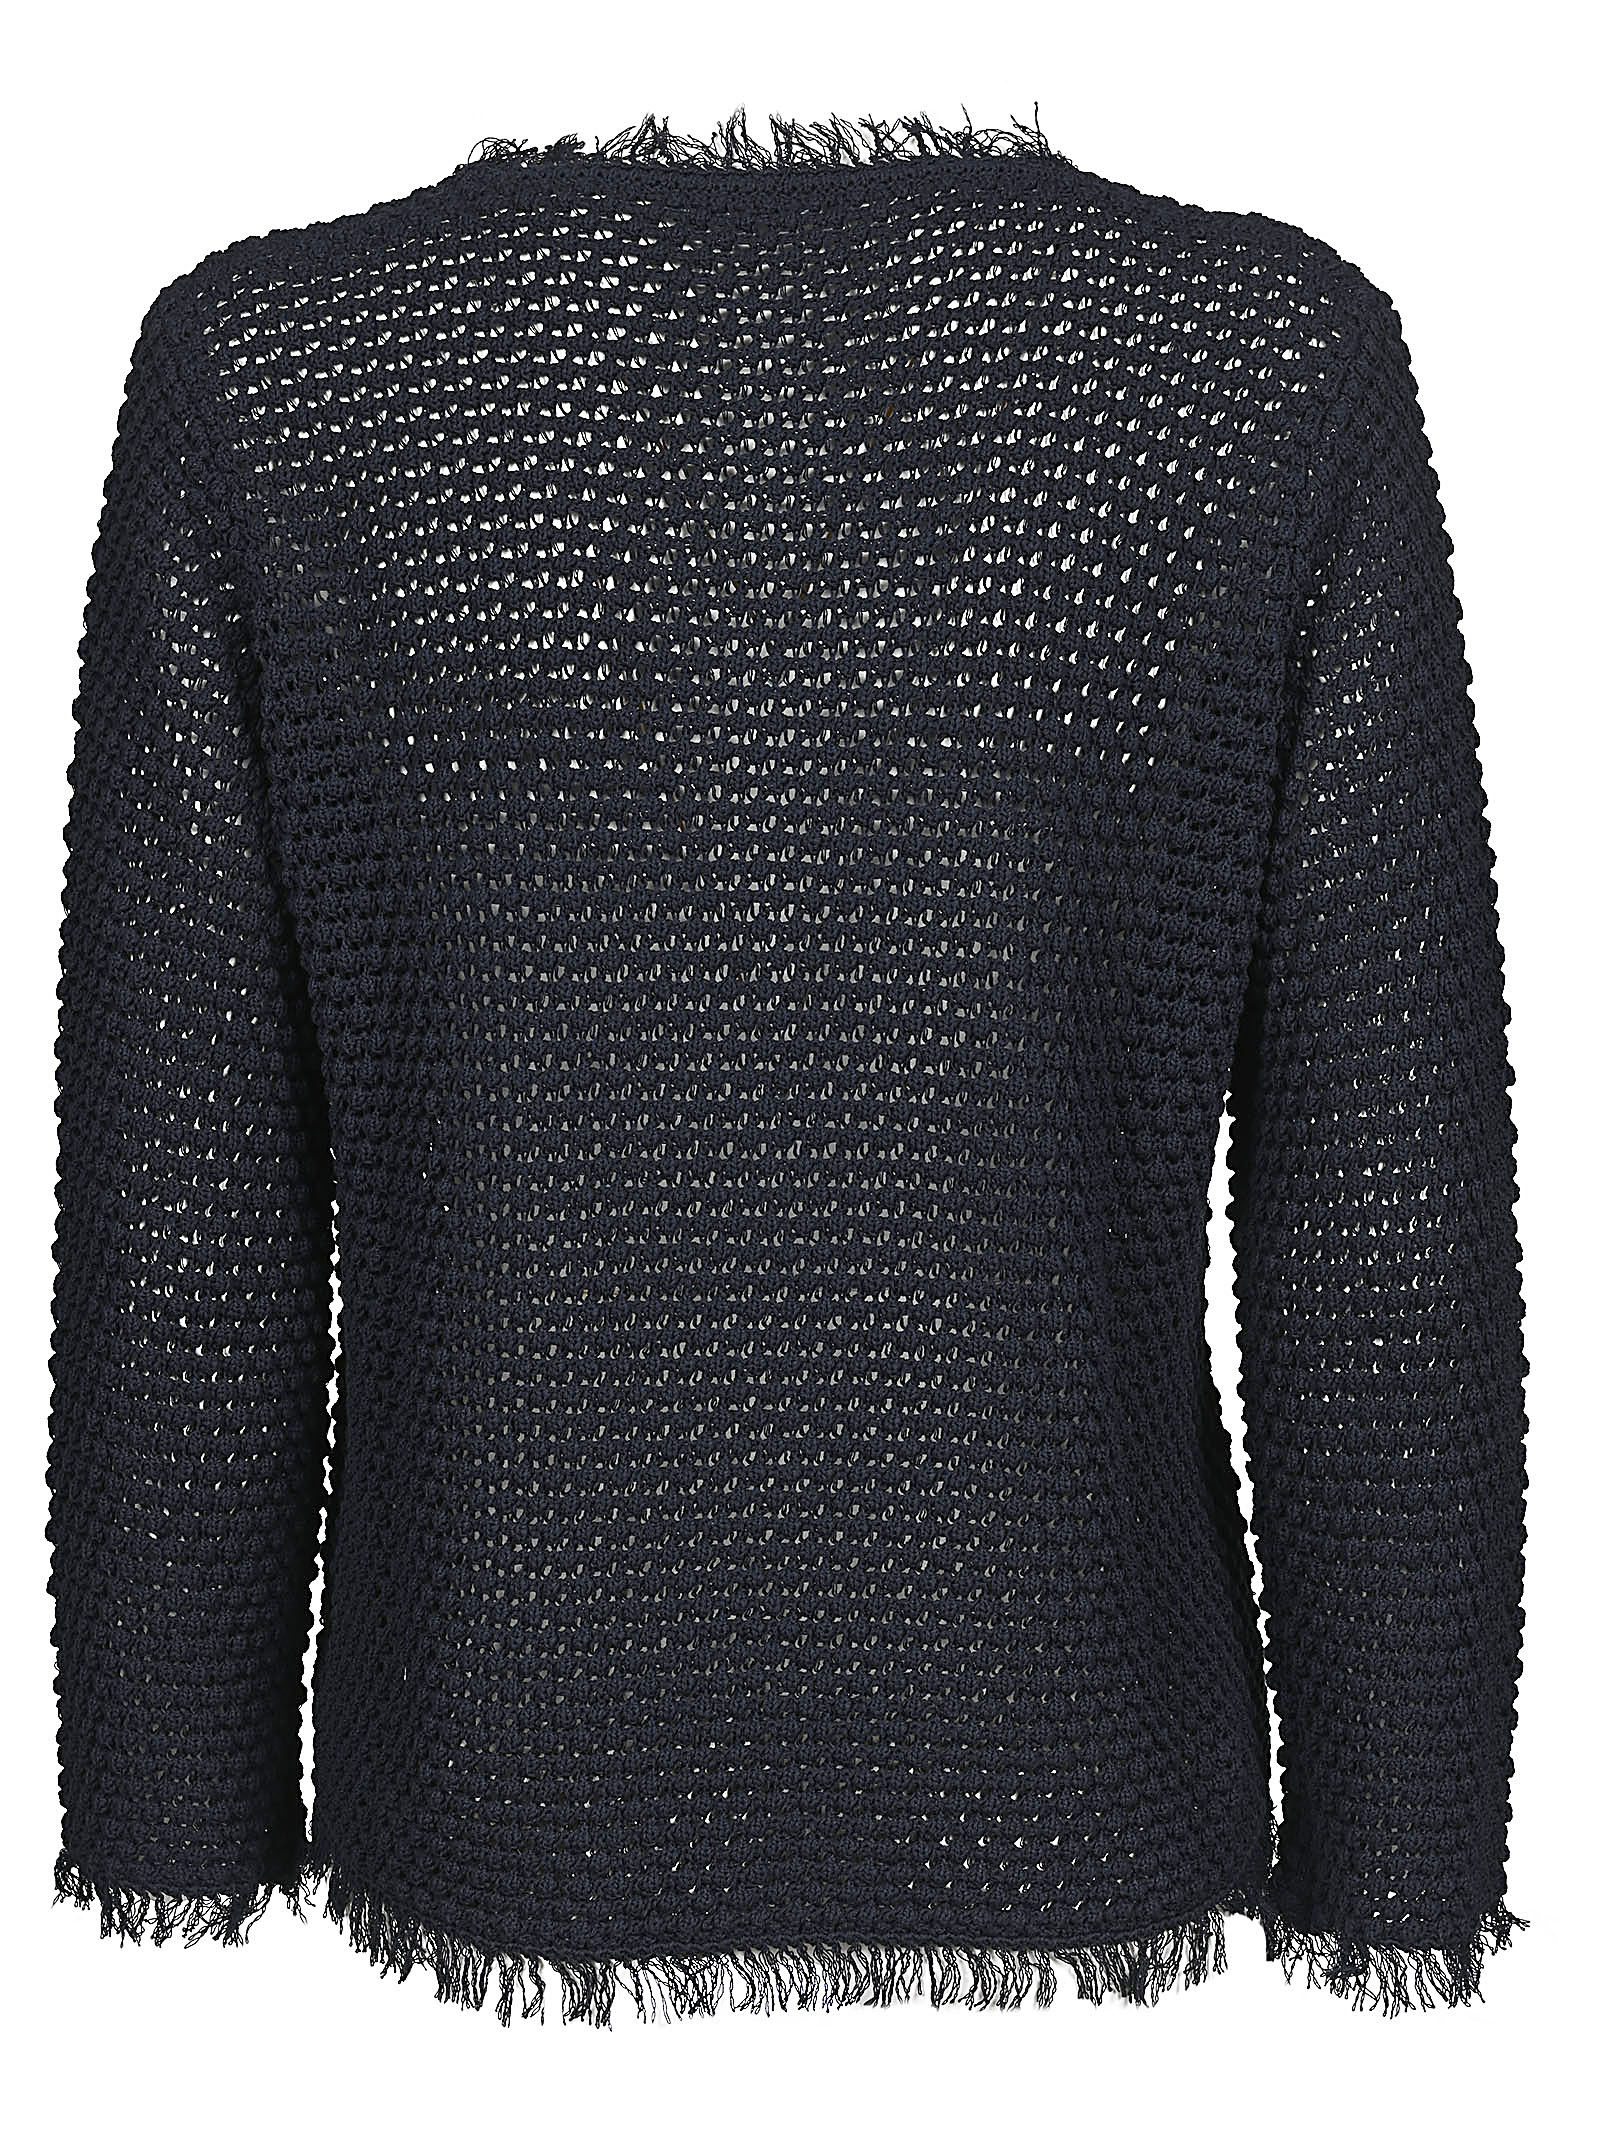 Manipur MANIPUR- Cotton Sweater